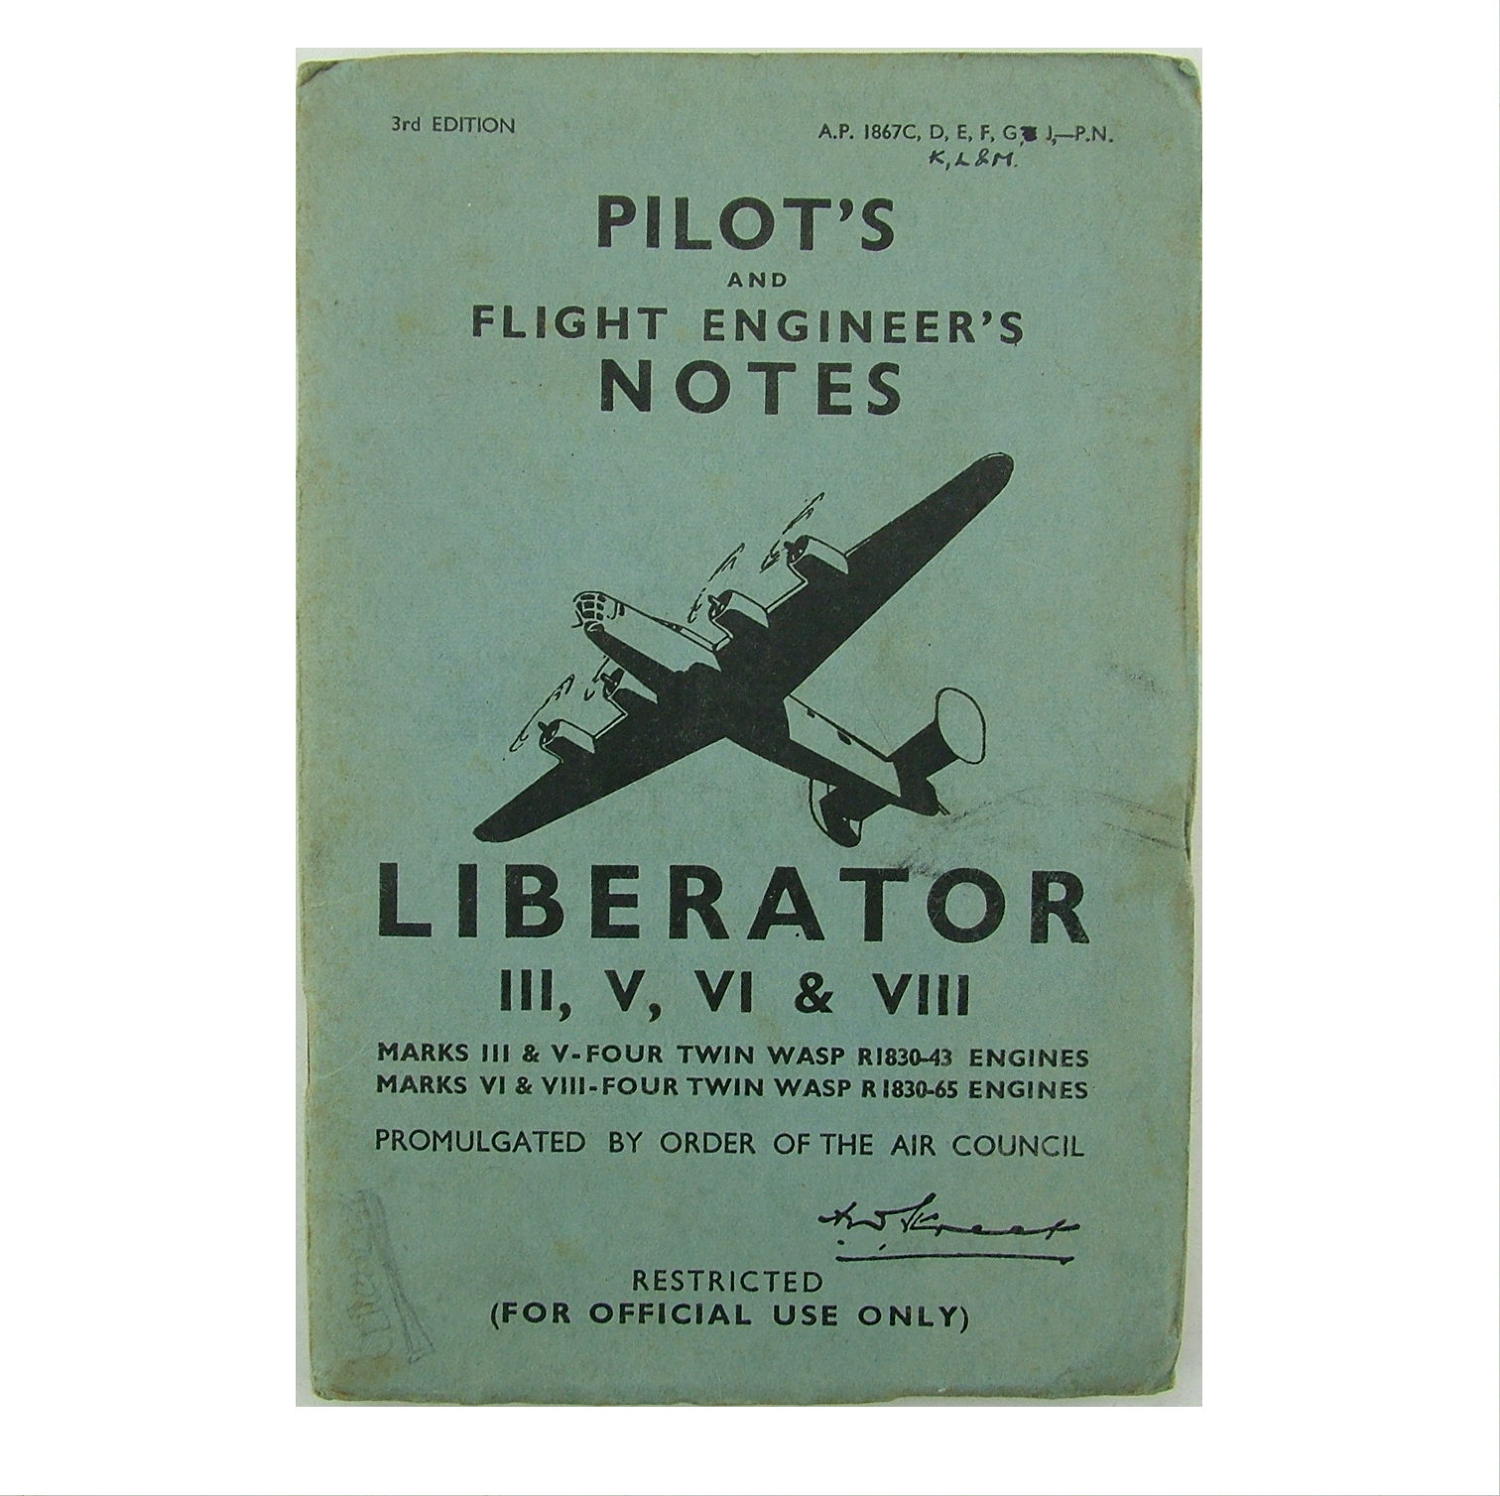 RAF pilot's notes, Liberator III,V,VI & VII